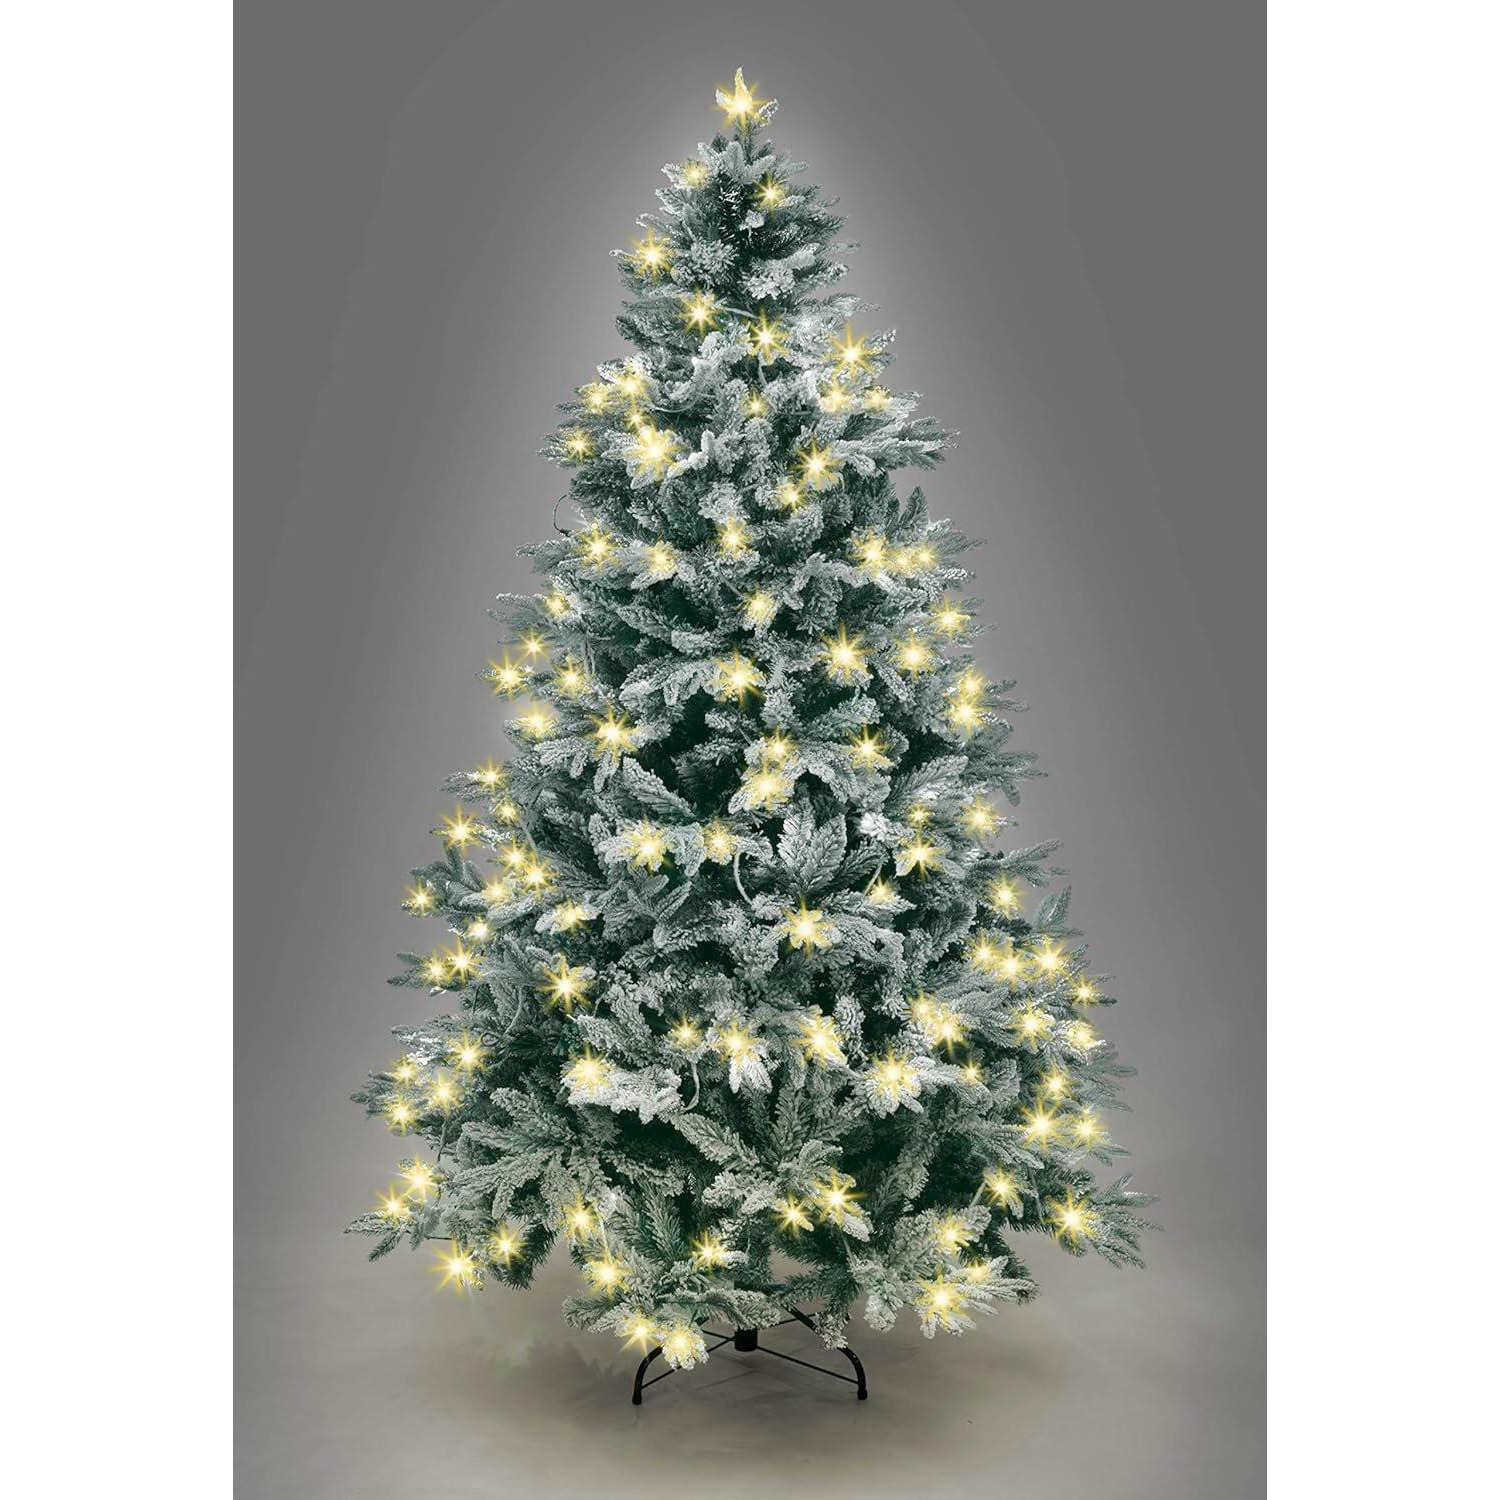 10FT Prelit Green Lapland Fir Christmas Tree Warm White LEDs - image 1